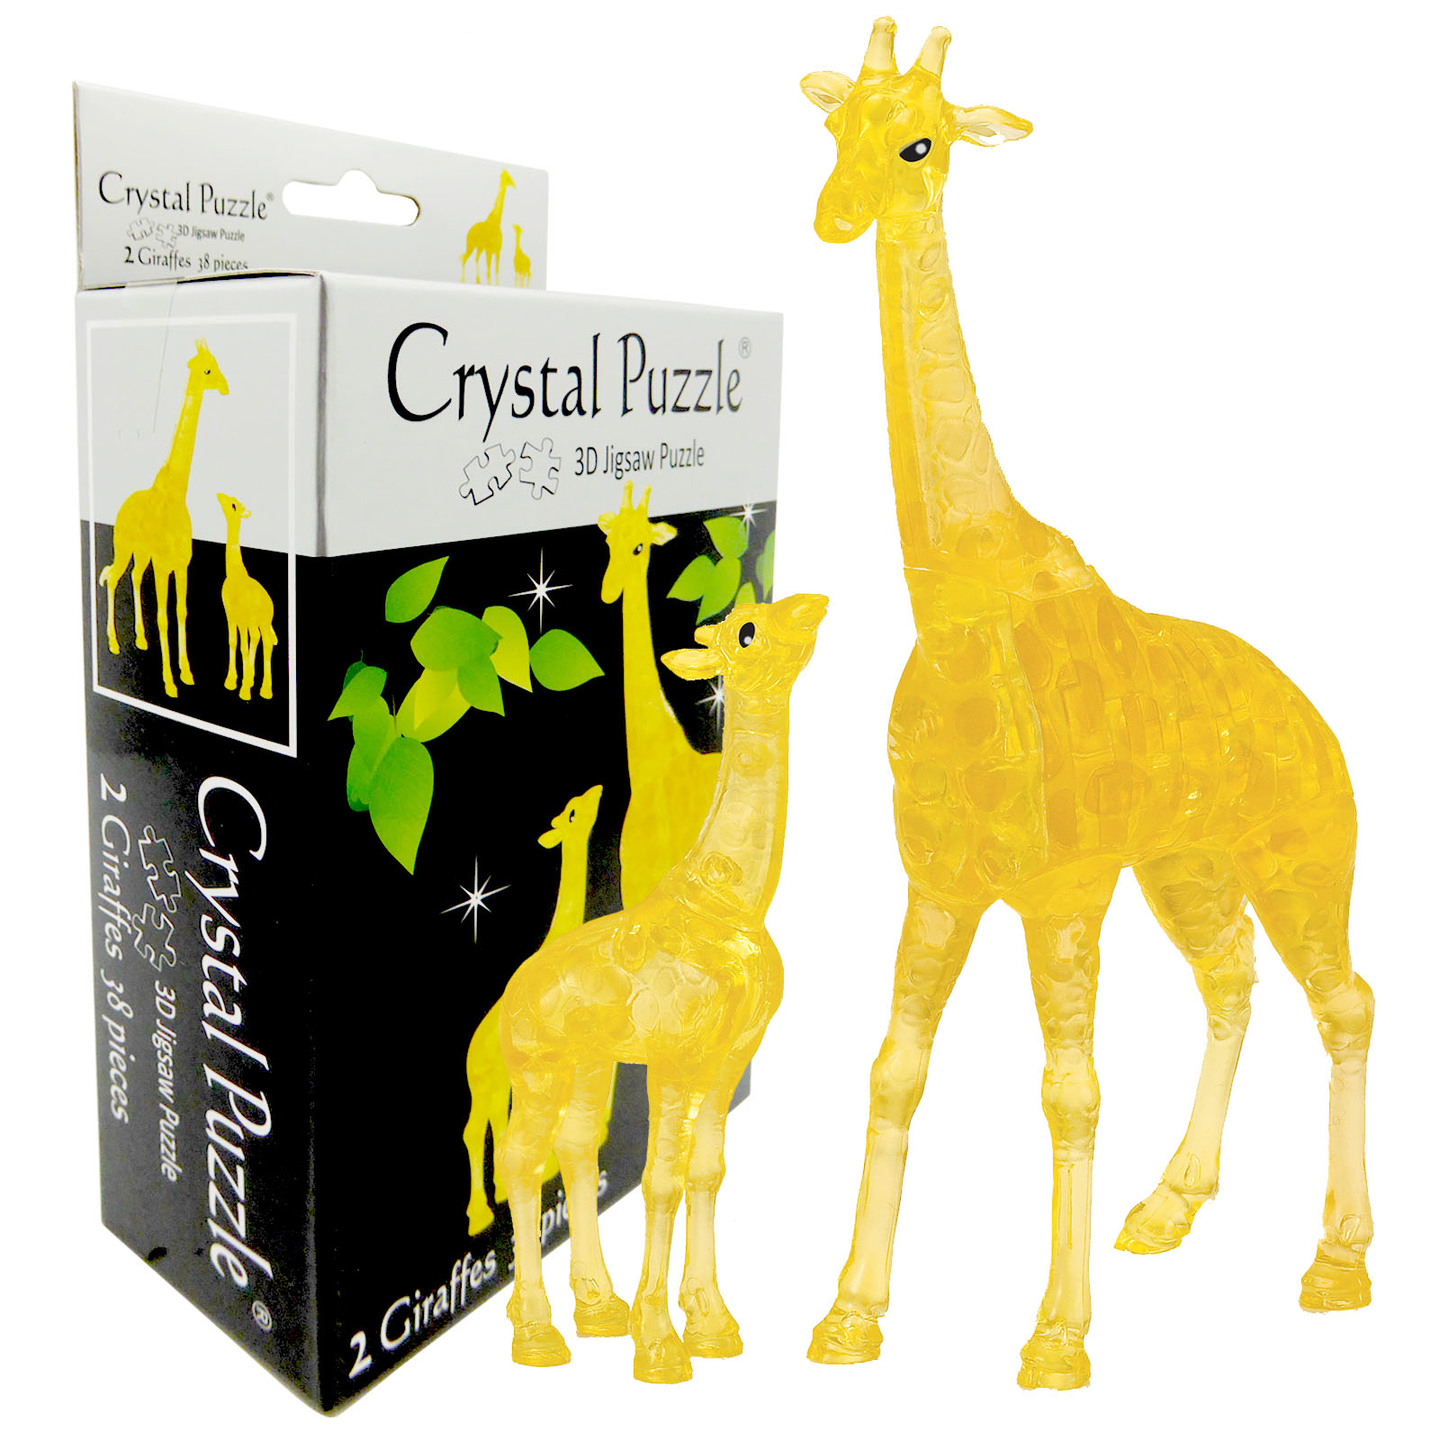 3D Crystal Puzzle Giraffe & Baby Set